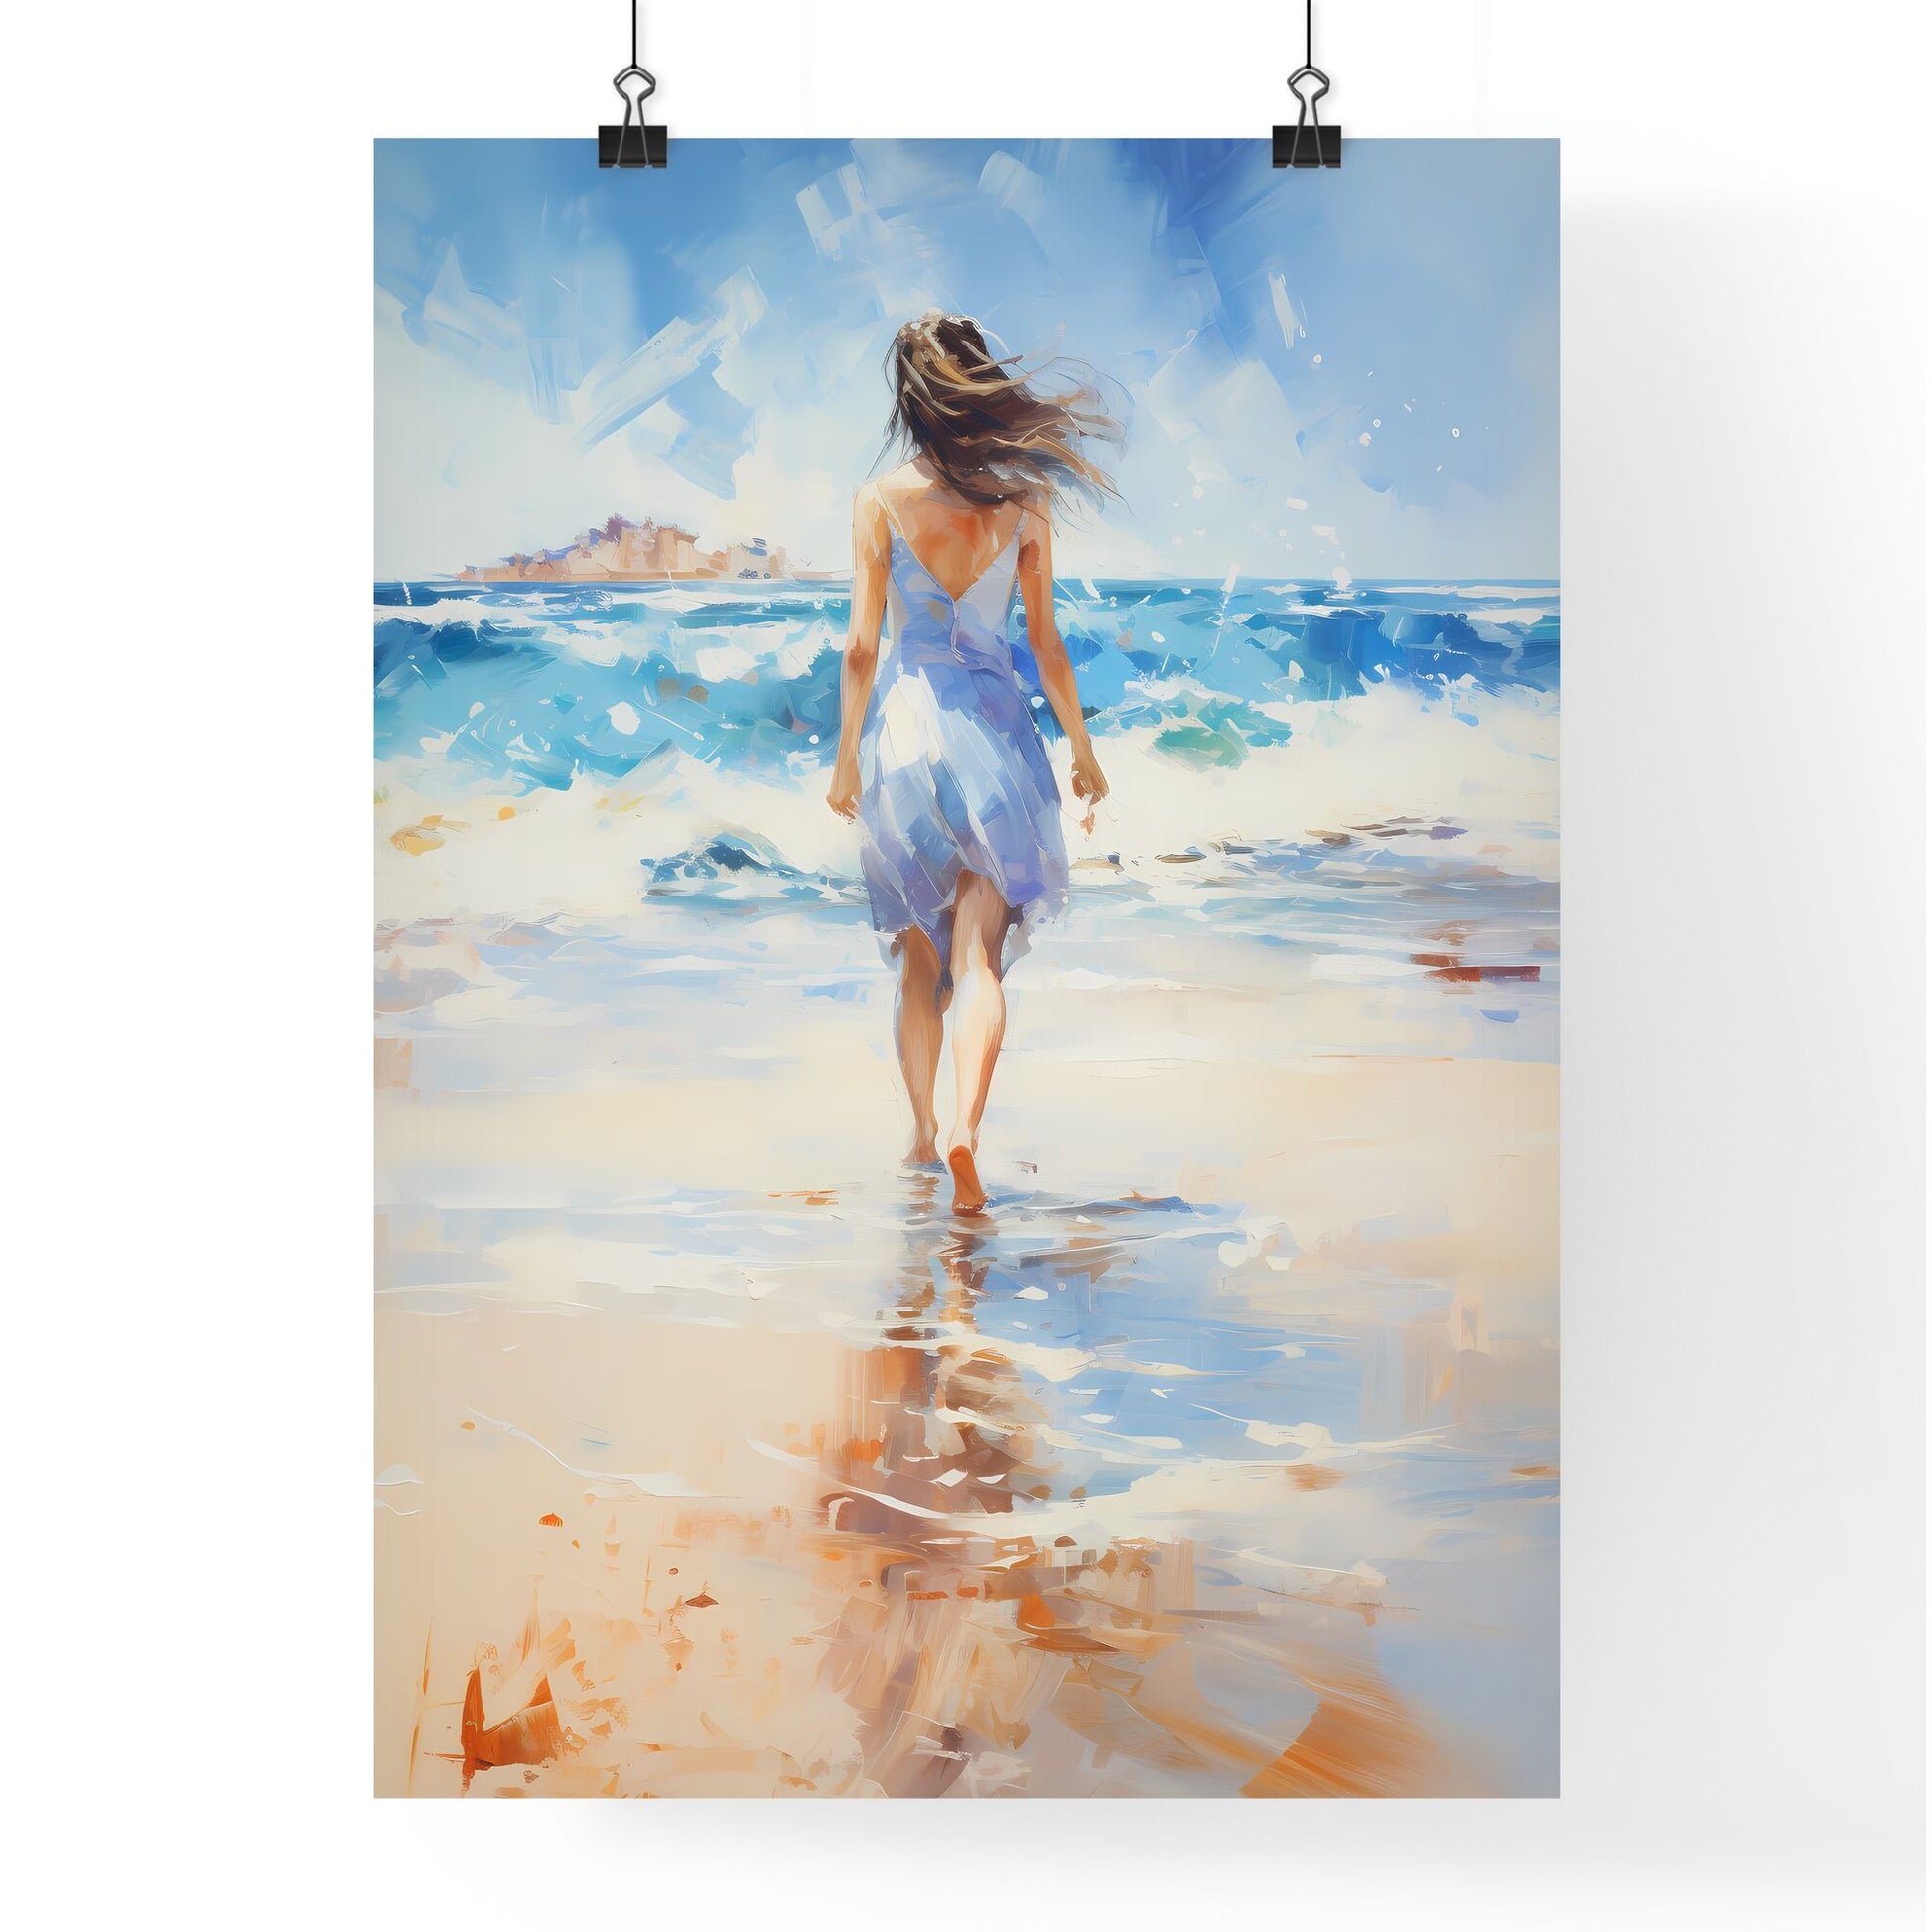 Woman Walking On Sand Beach Leaving Footprints - A Woman Walking On A Beach Default Title